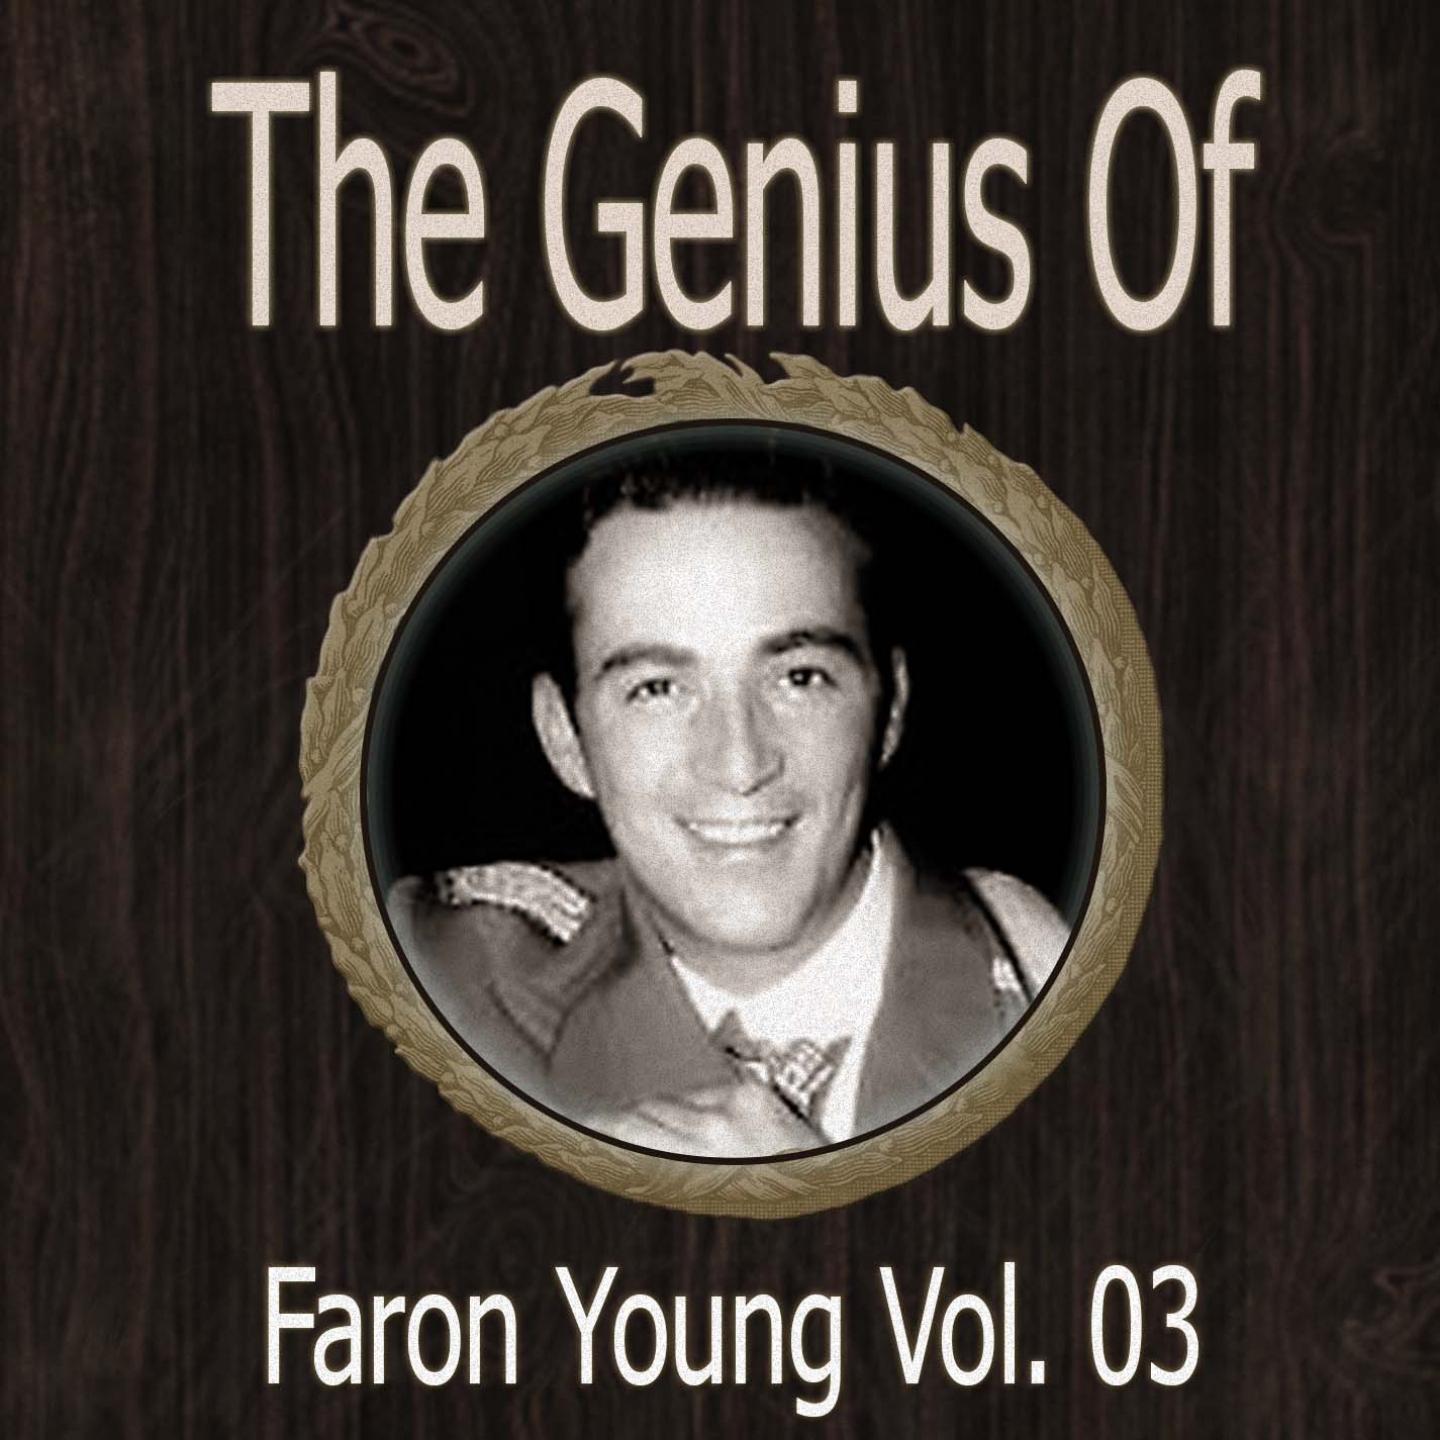 The Genius of Faron Young Vol 03